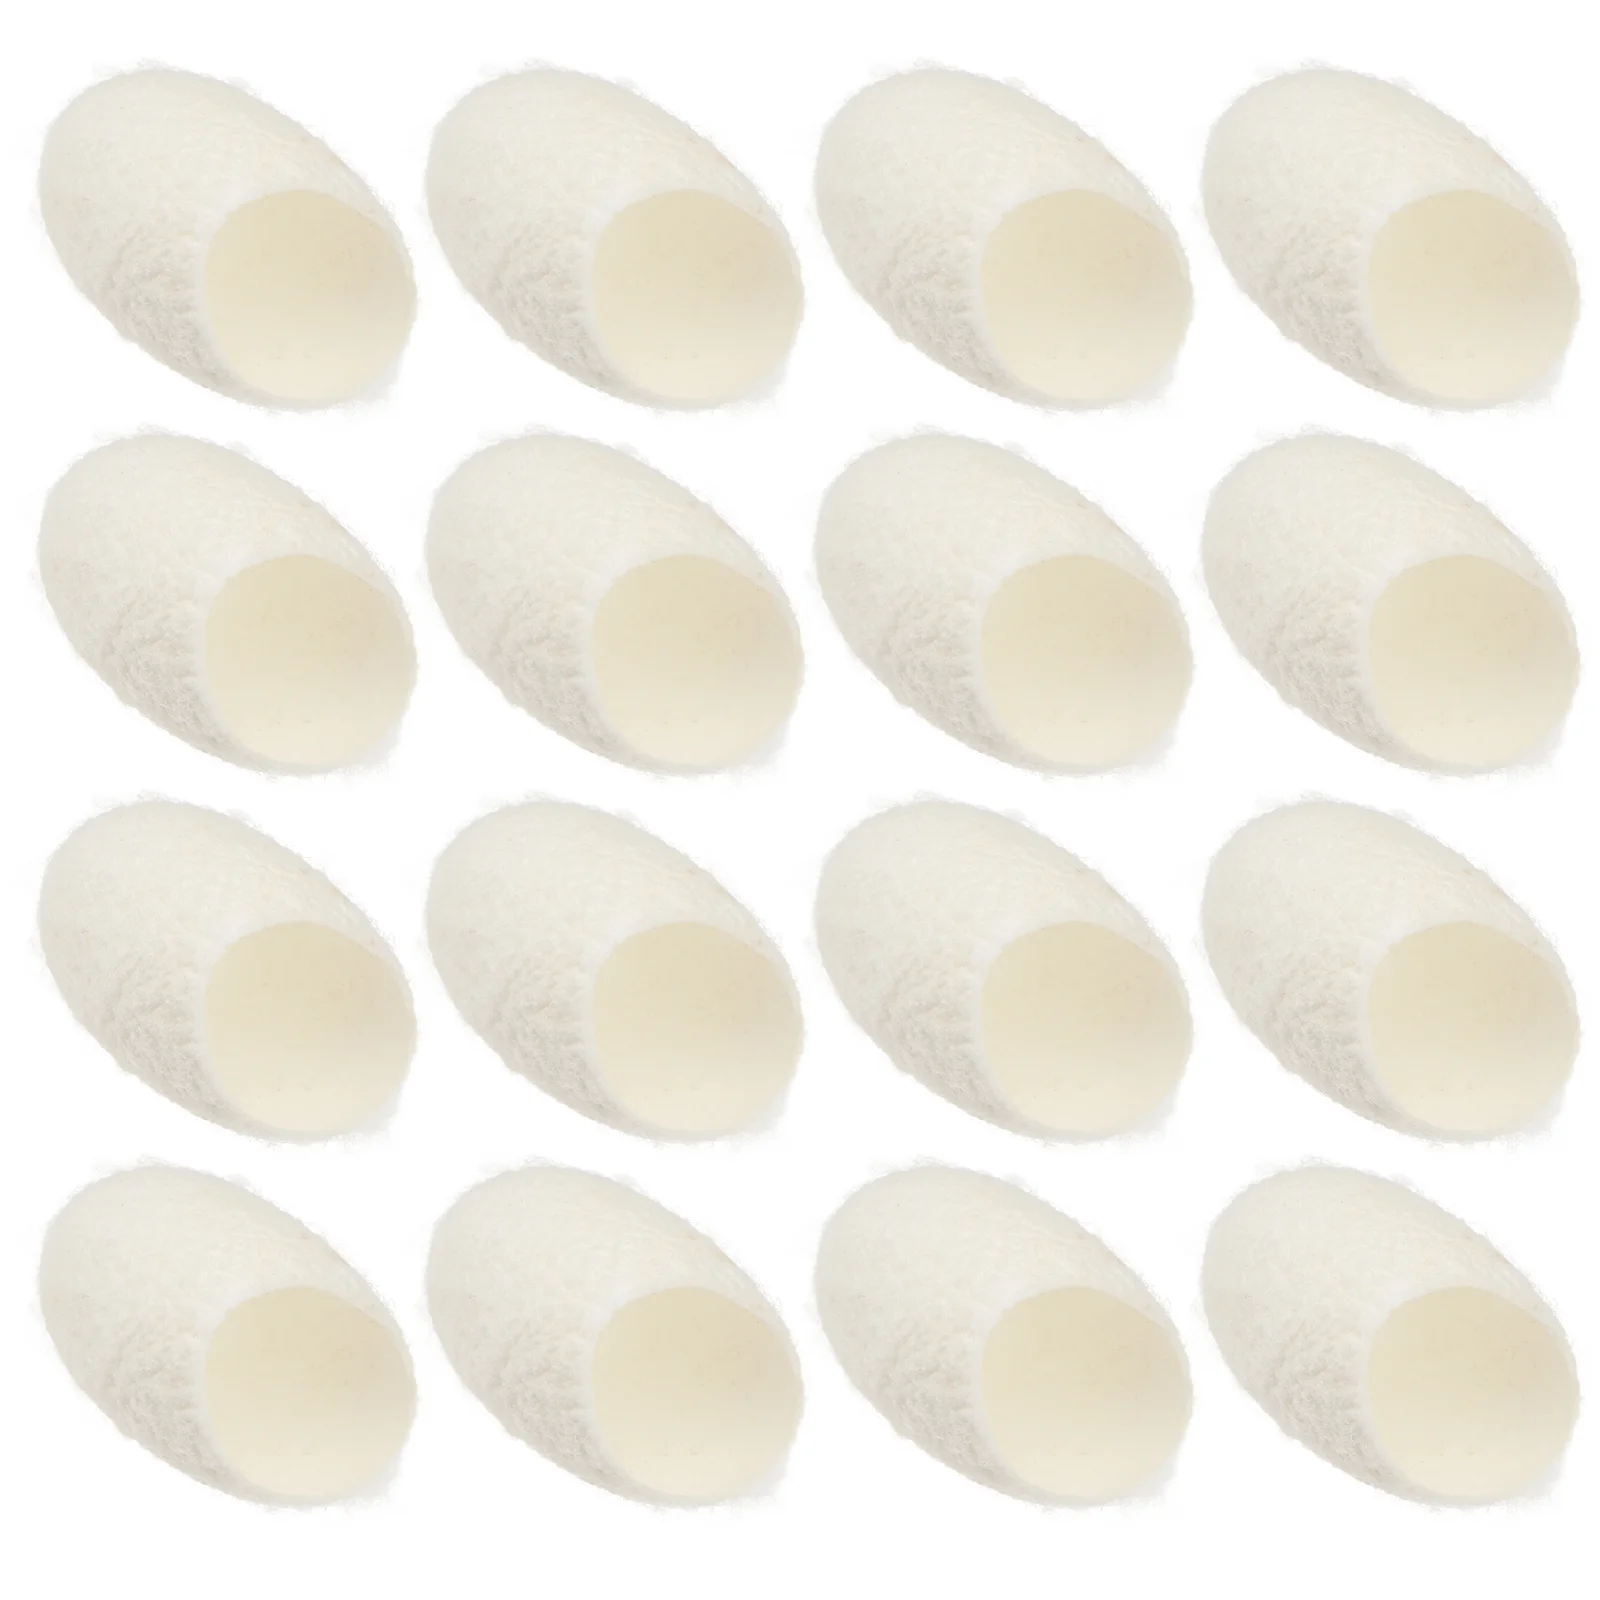 

100pcs Natural Organic Facial Cleaning Silkworm Balls for Skin Care Whitening Exfoliator Blackheads Remove